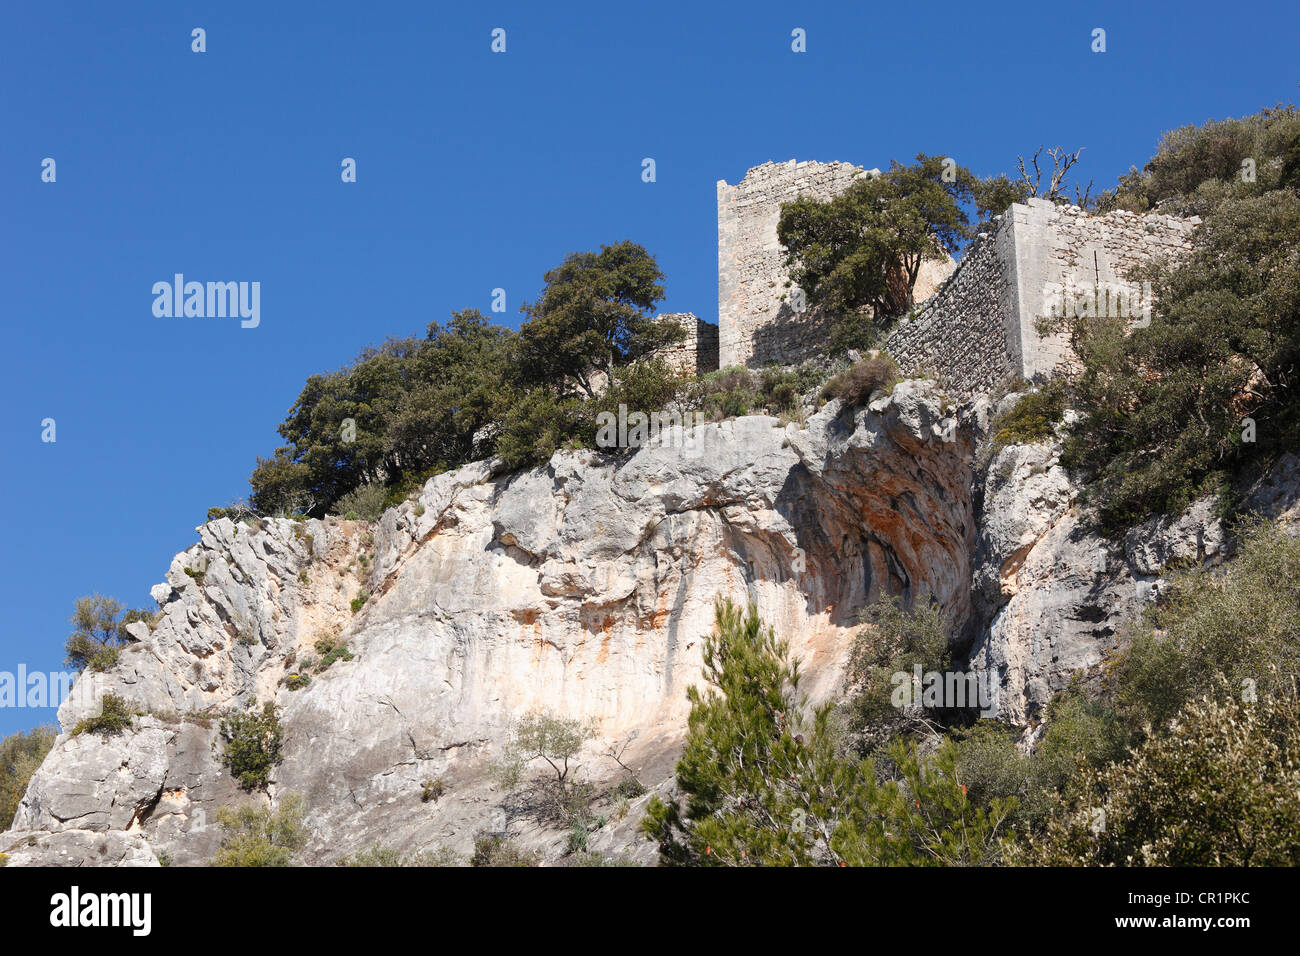 Castillo de Alaró ruine du château, Puig de Alaró mountain, Malaga, Majorque, Iles Baléares, Espagne, Europe Banque D'Images